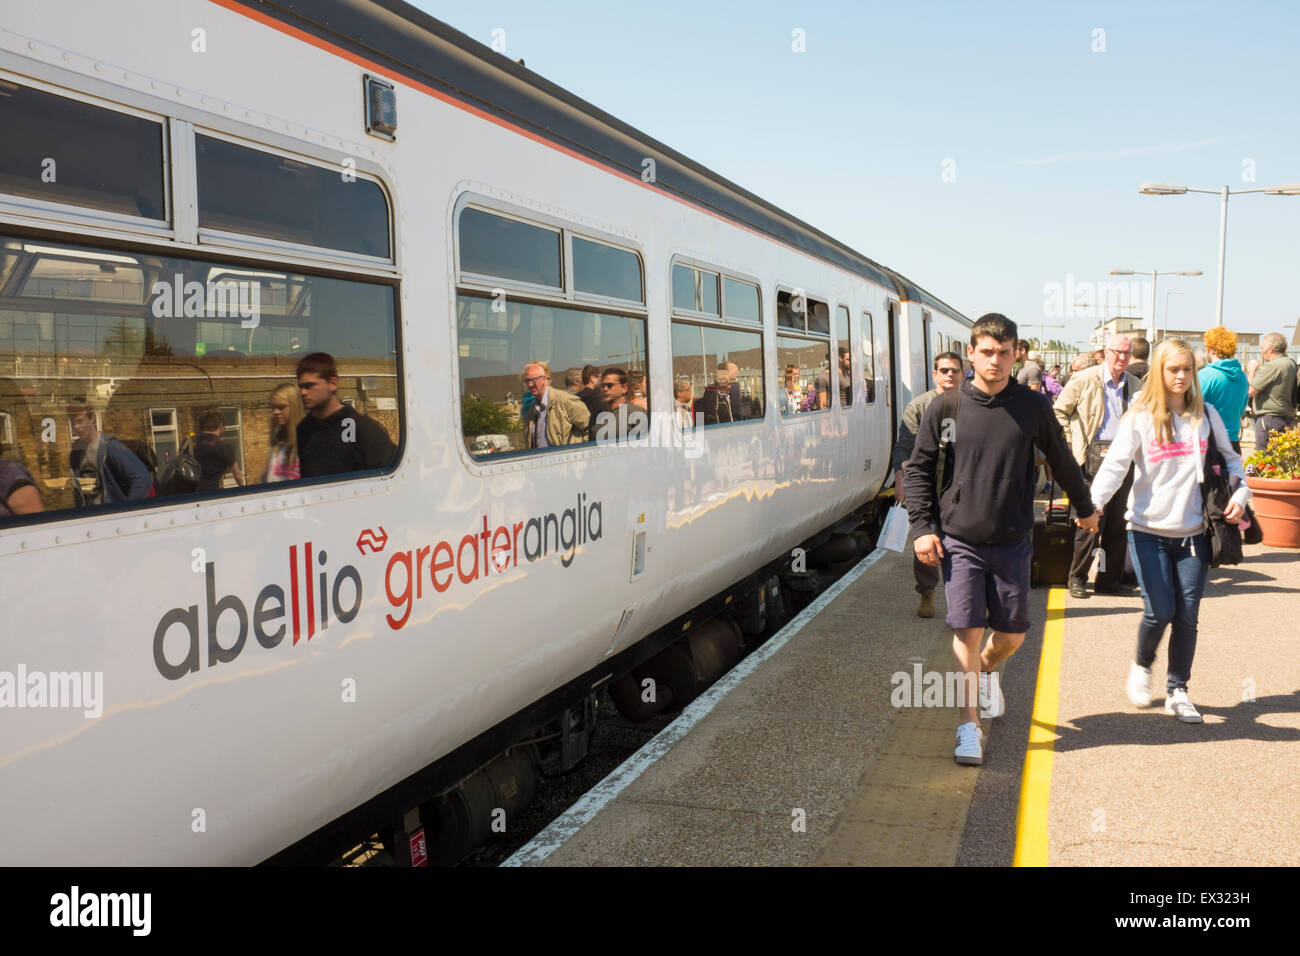 Passengers alighting an Abellio Greater Anglia train Stock Photo